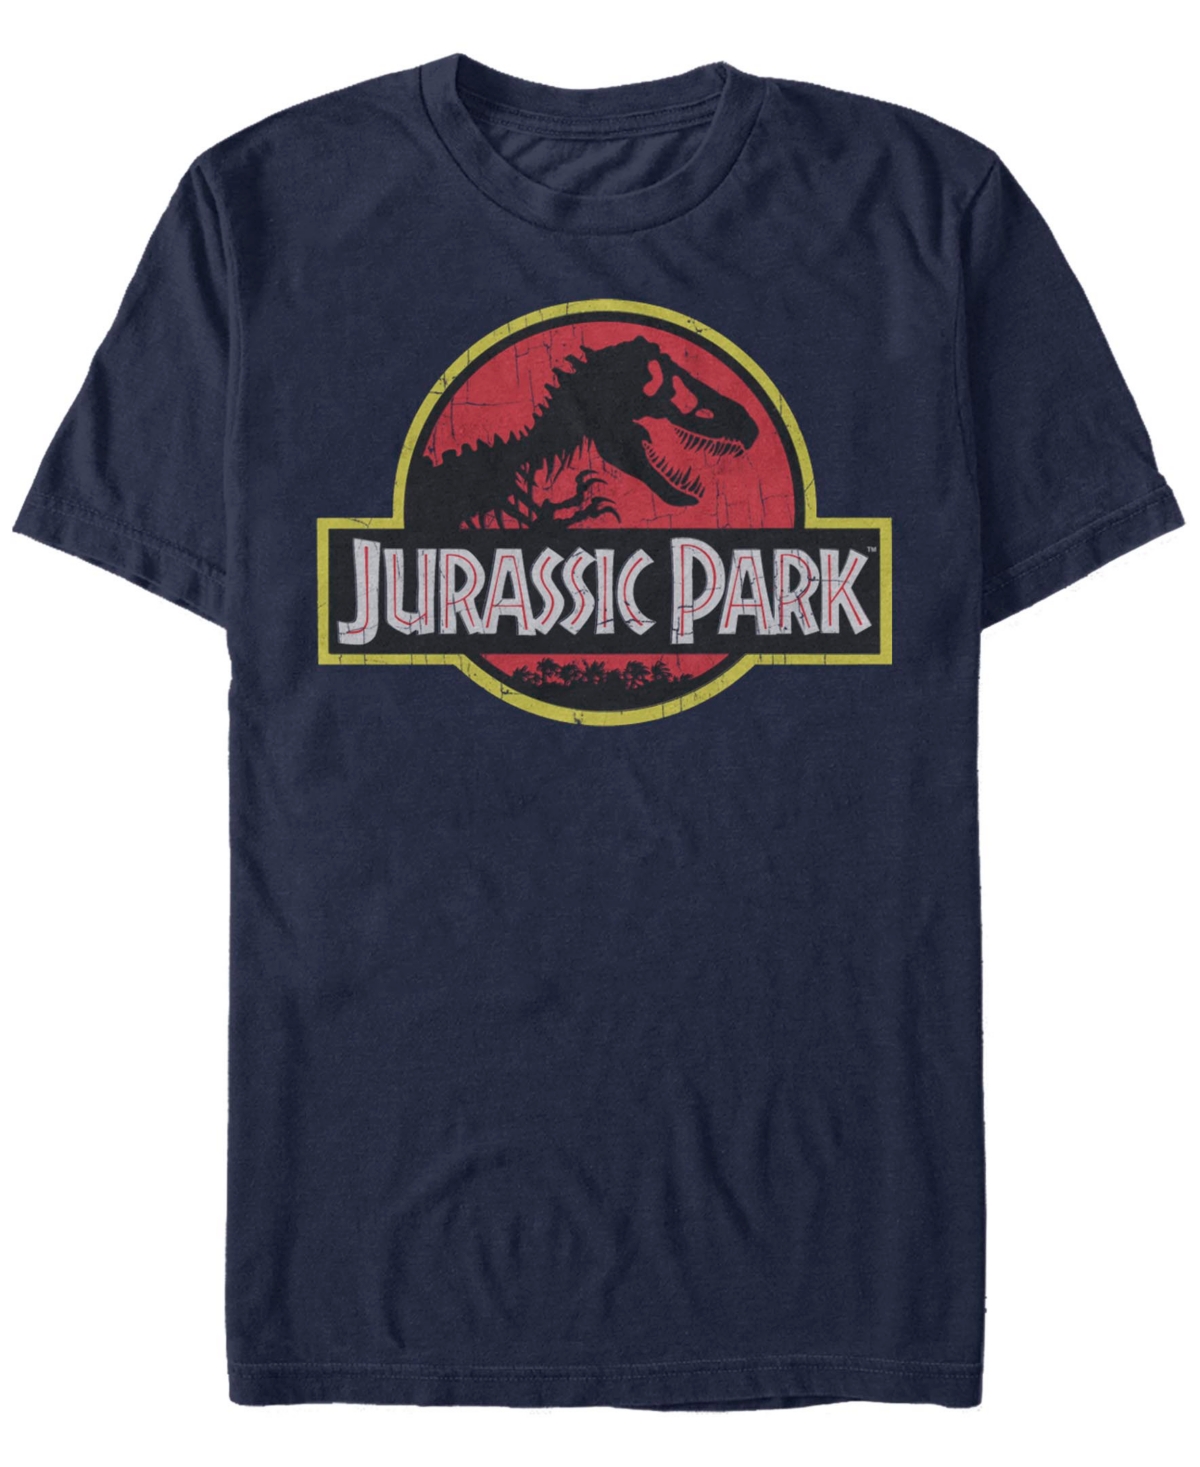 Fifth Sun Men's Jurassic Park Jurassic Park Short Sleeve T-shirt